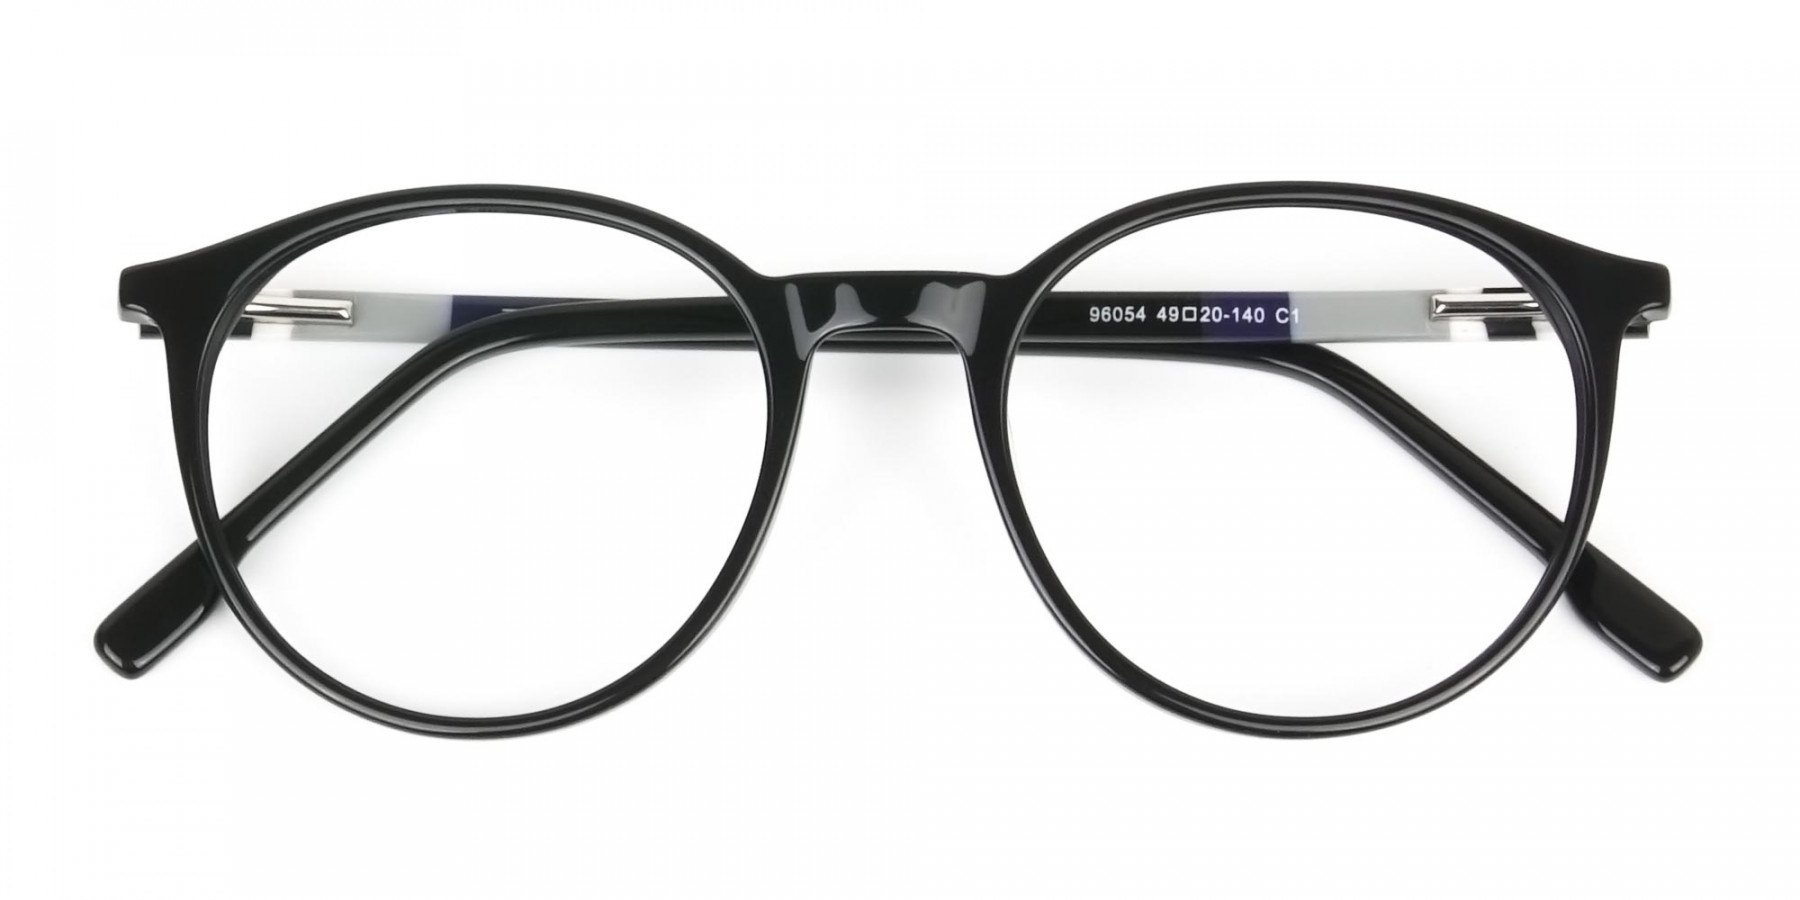 Designer Black Acetate Eyeglasses in Round Men Women - 1